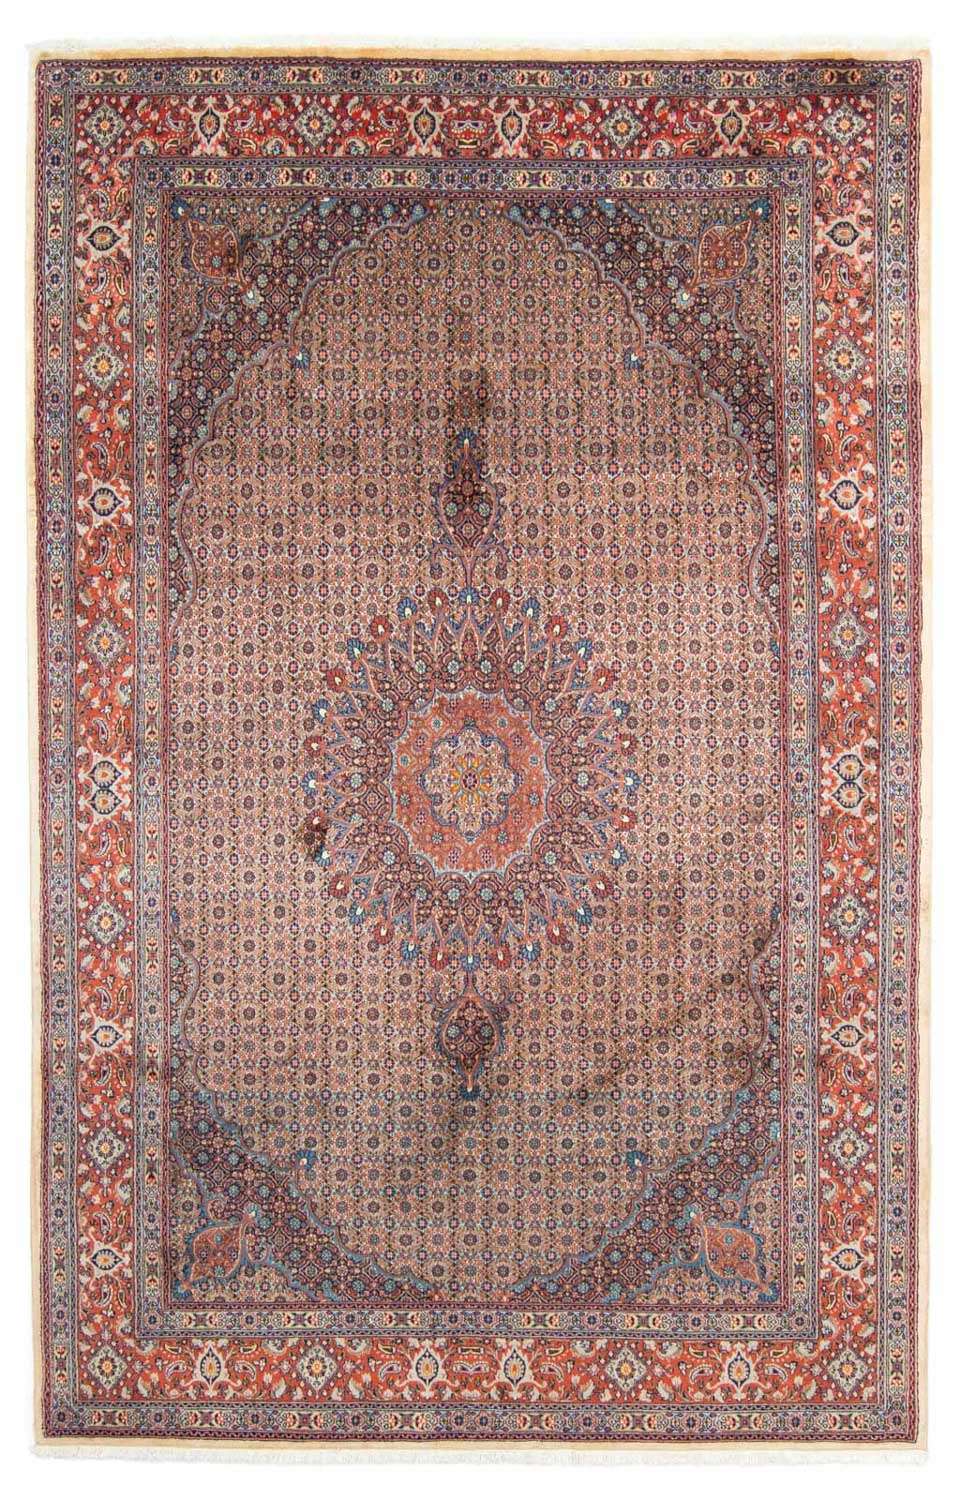 Tapis persan - Classique - 293 x 198 cm - rouge clair